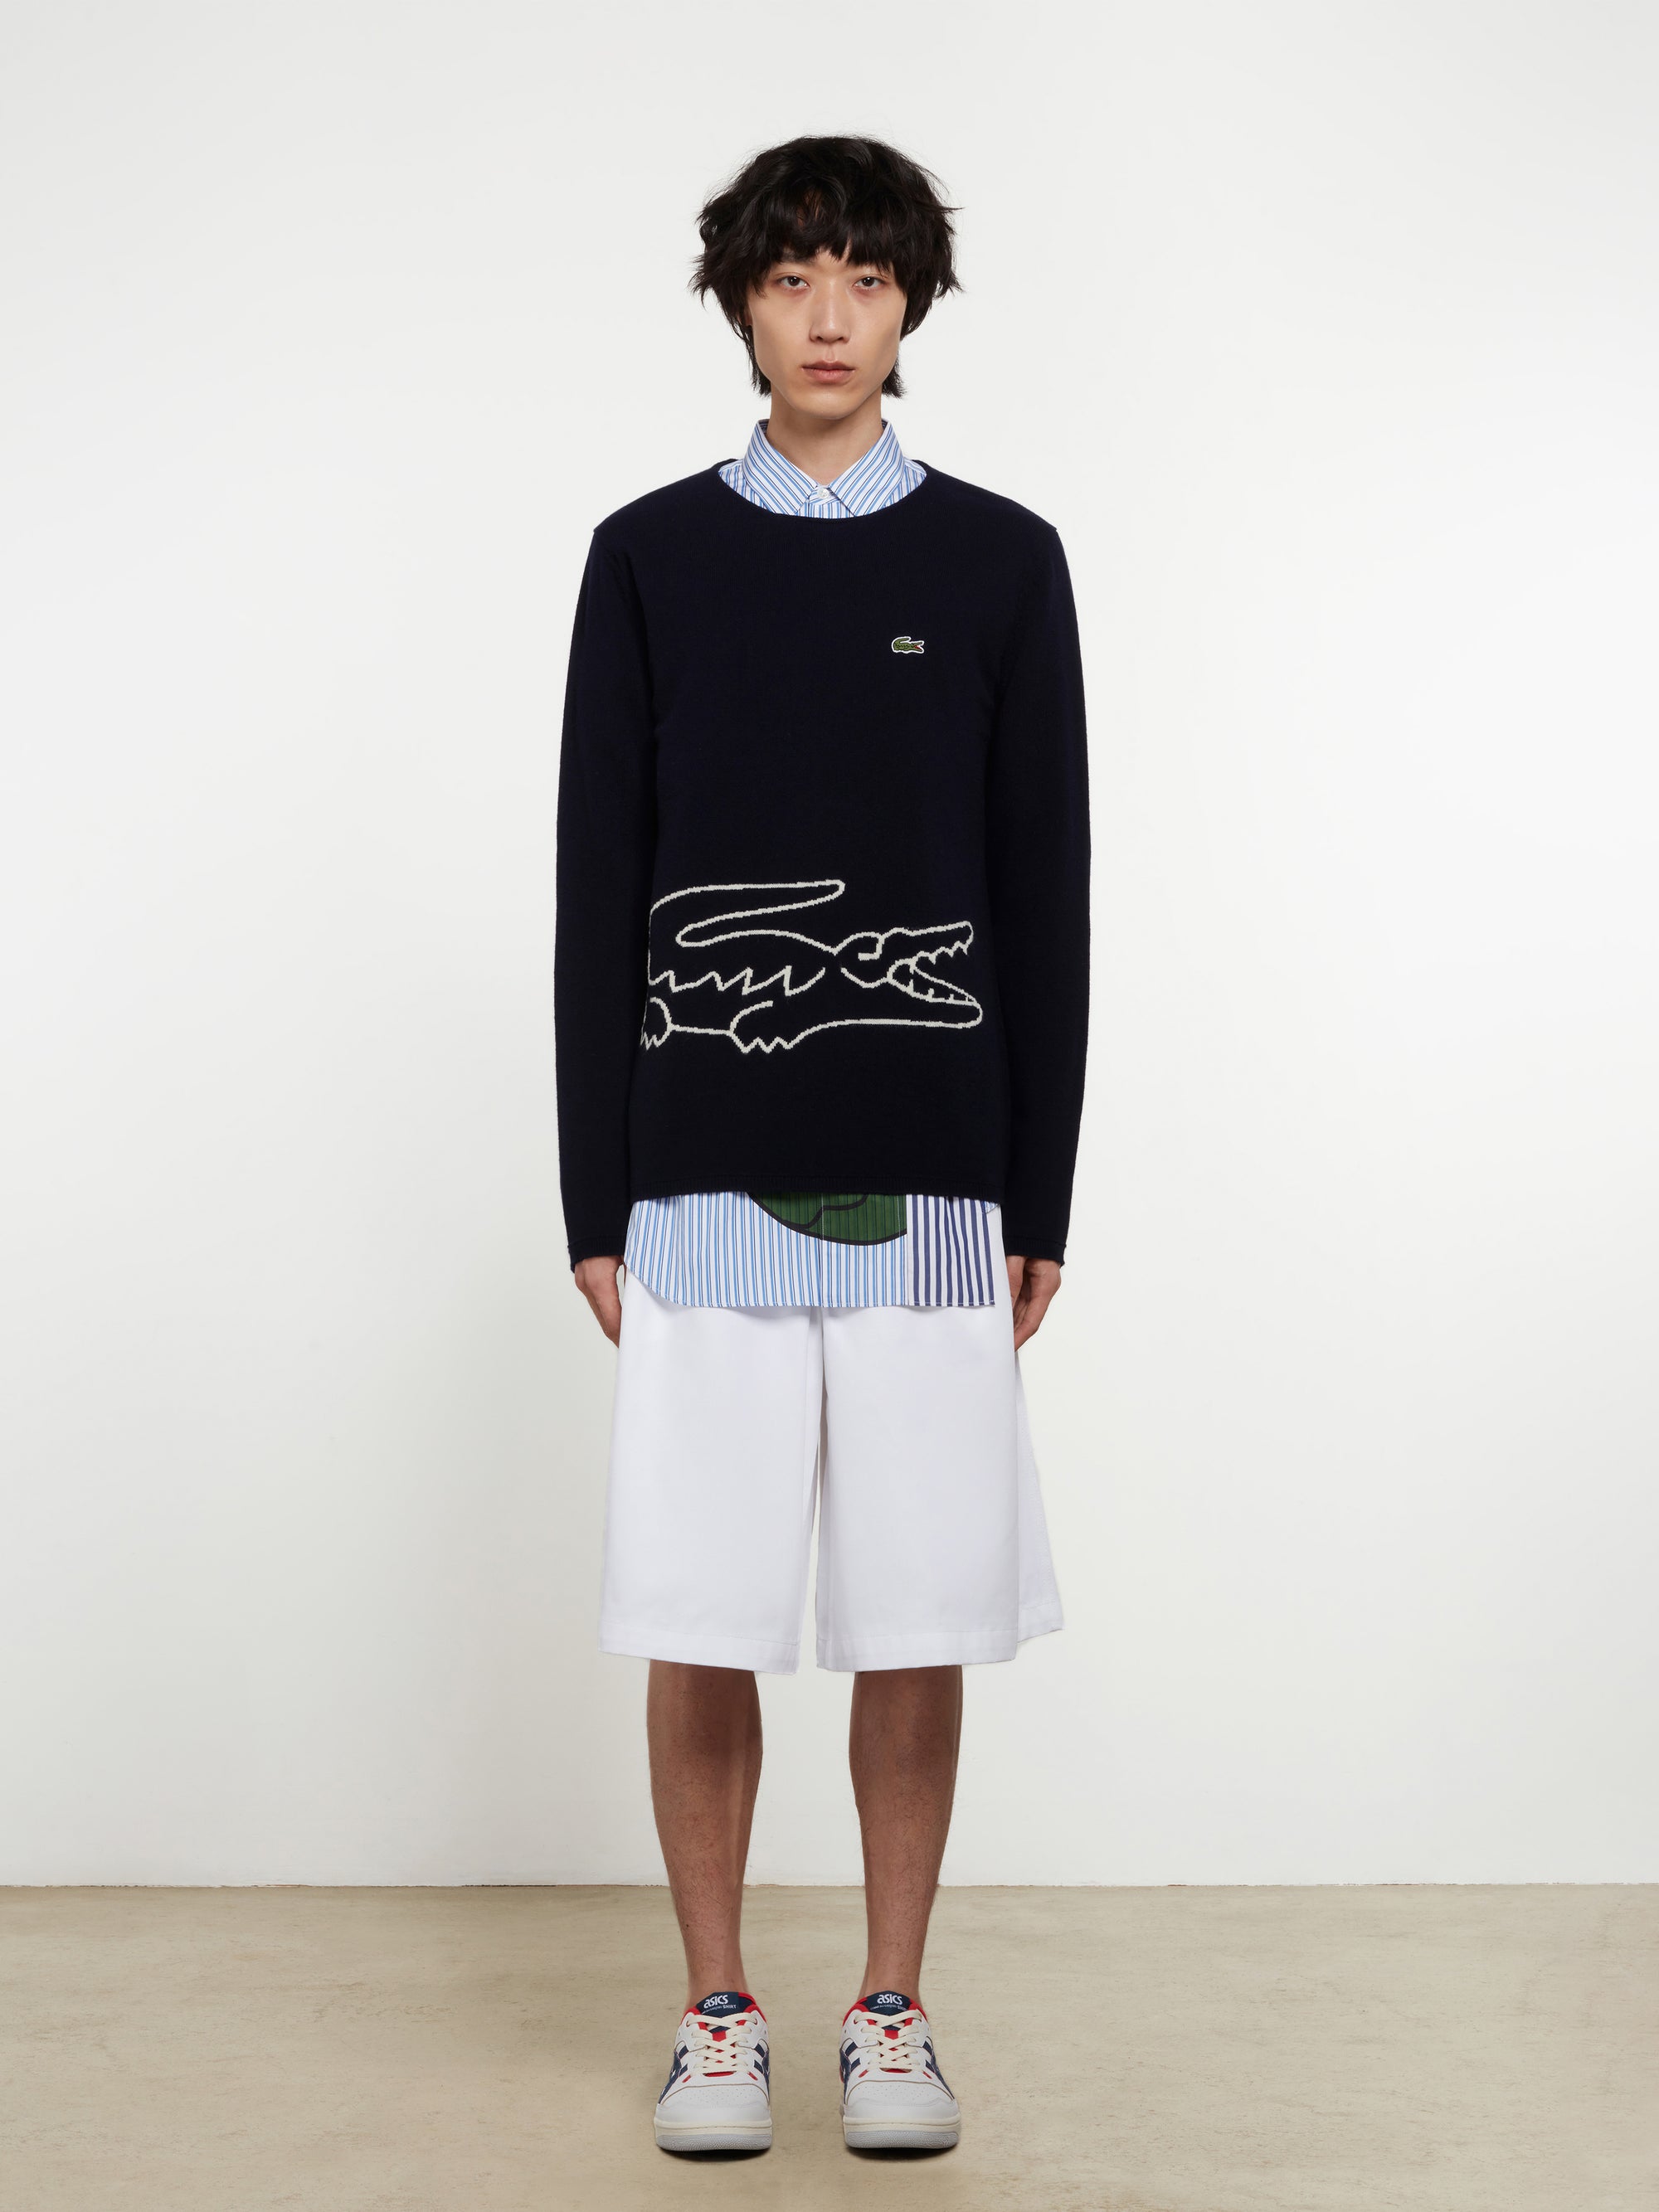 CDG Shirt - Lacoste Men’s Knit Sweater - (Black) view 4